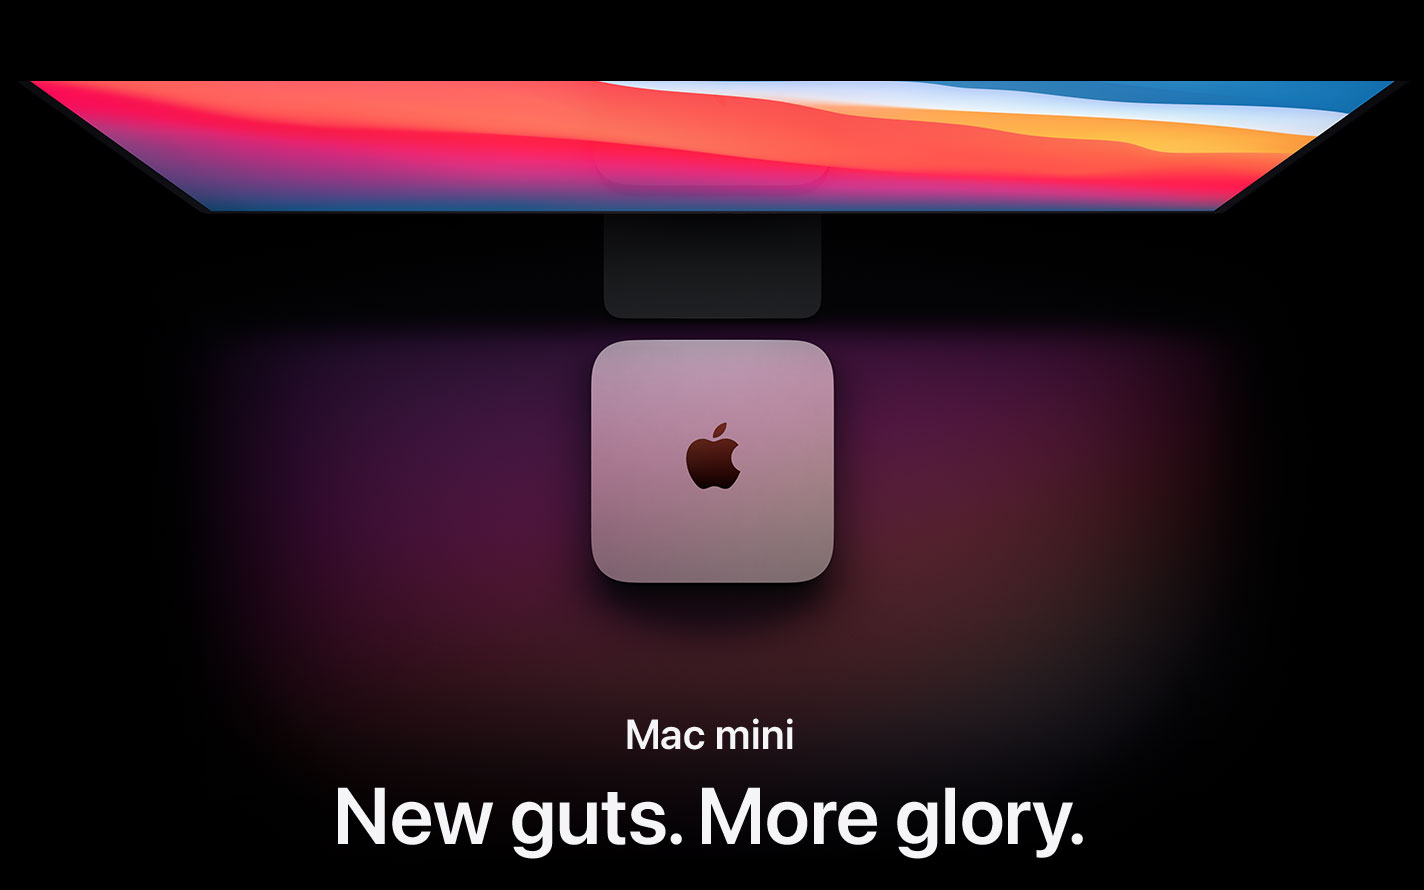 Mac mini. New guts. More glory.